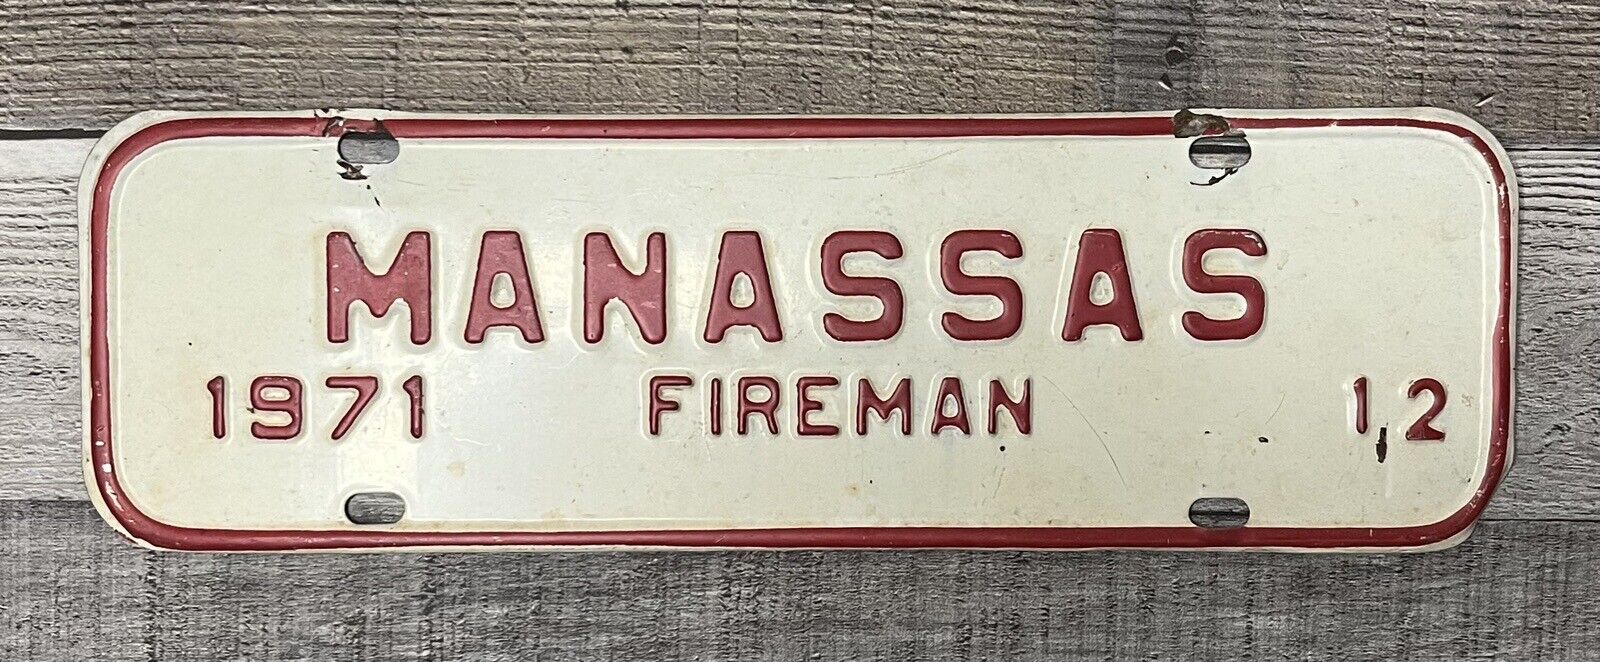 1971 Manassas Virginia Fireman License Plate Town Tag Topper Retro Firefighter